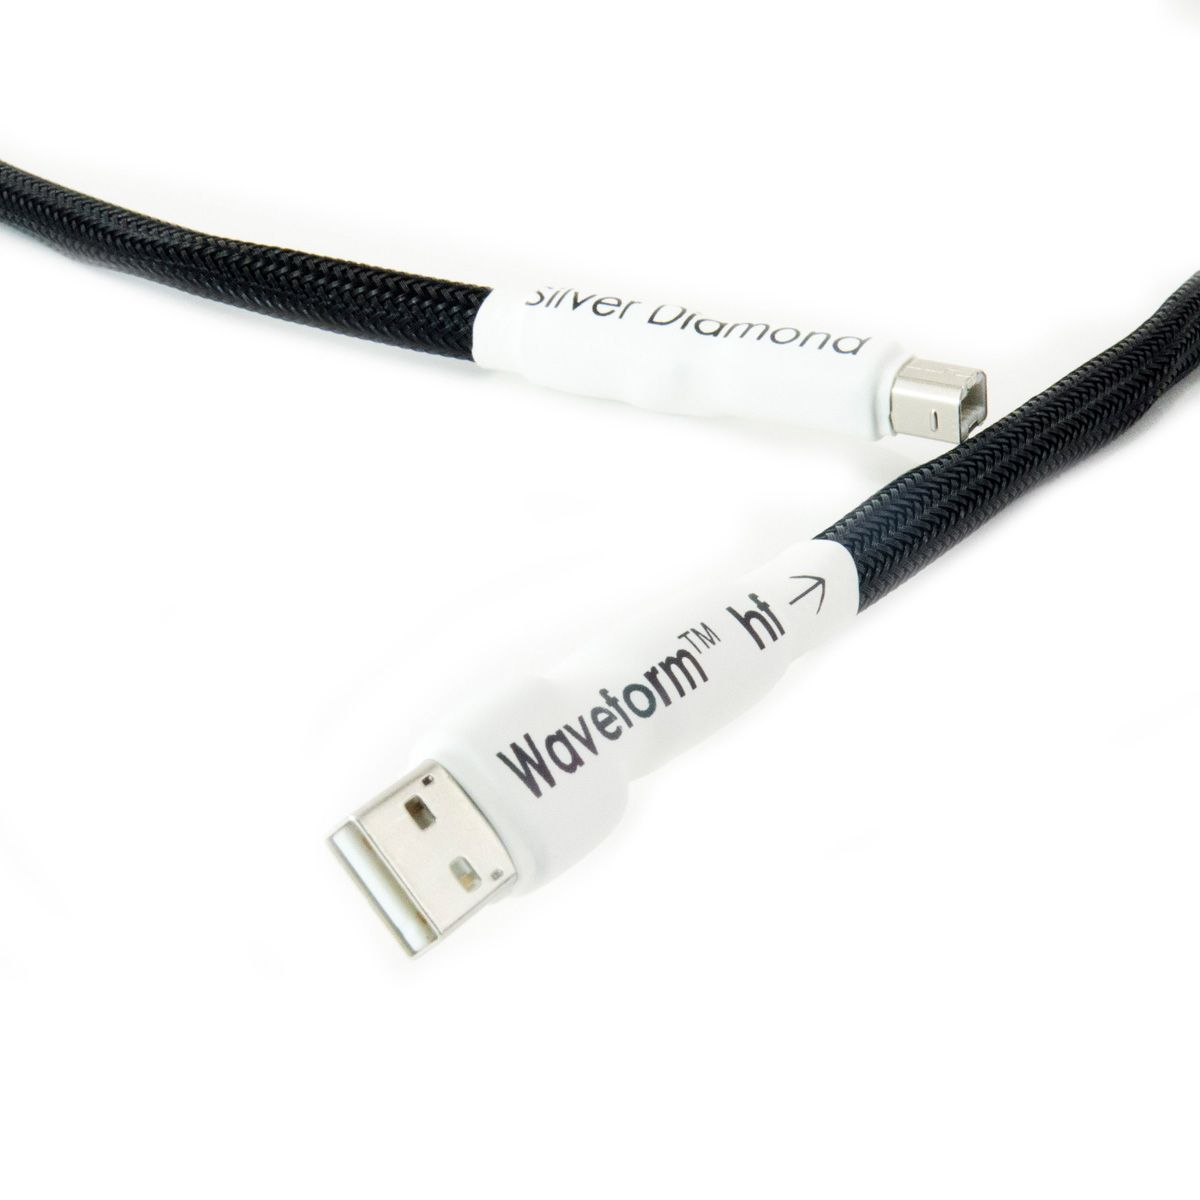 Tellurium Q Silver Diamond Waveform™ HF USB Type A to Type B Cable